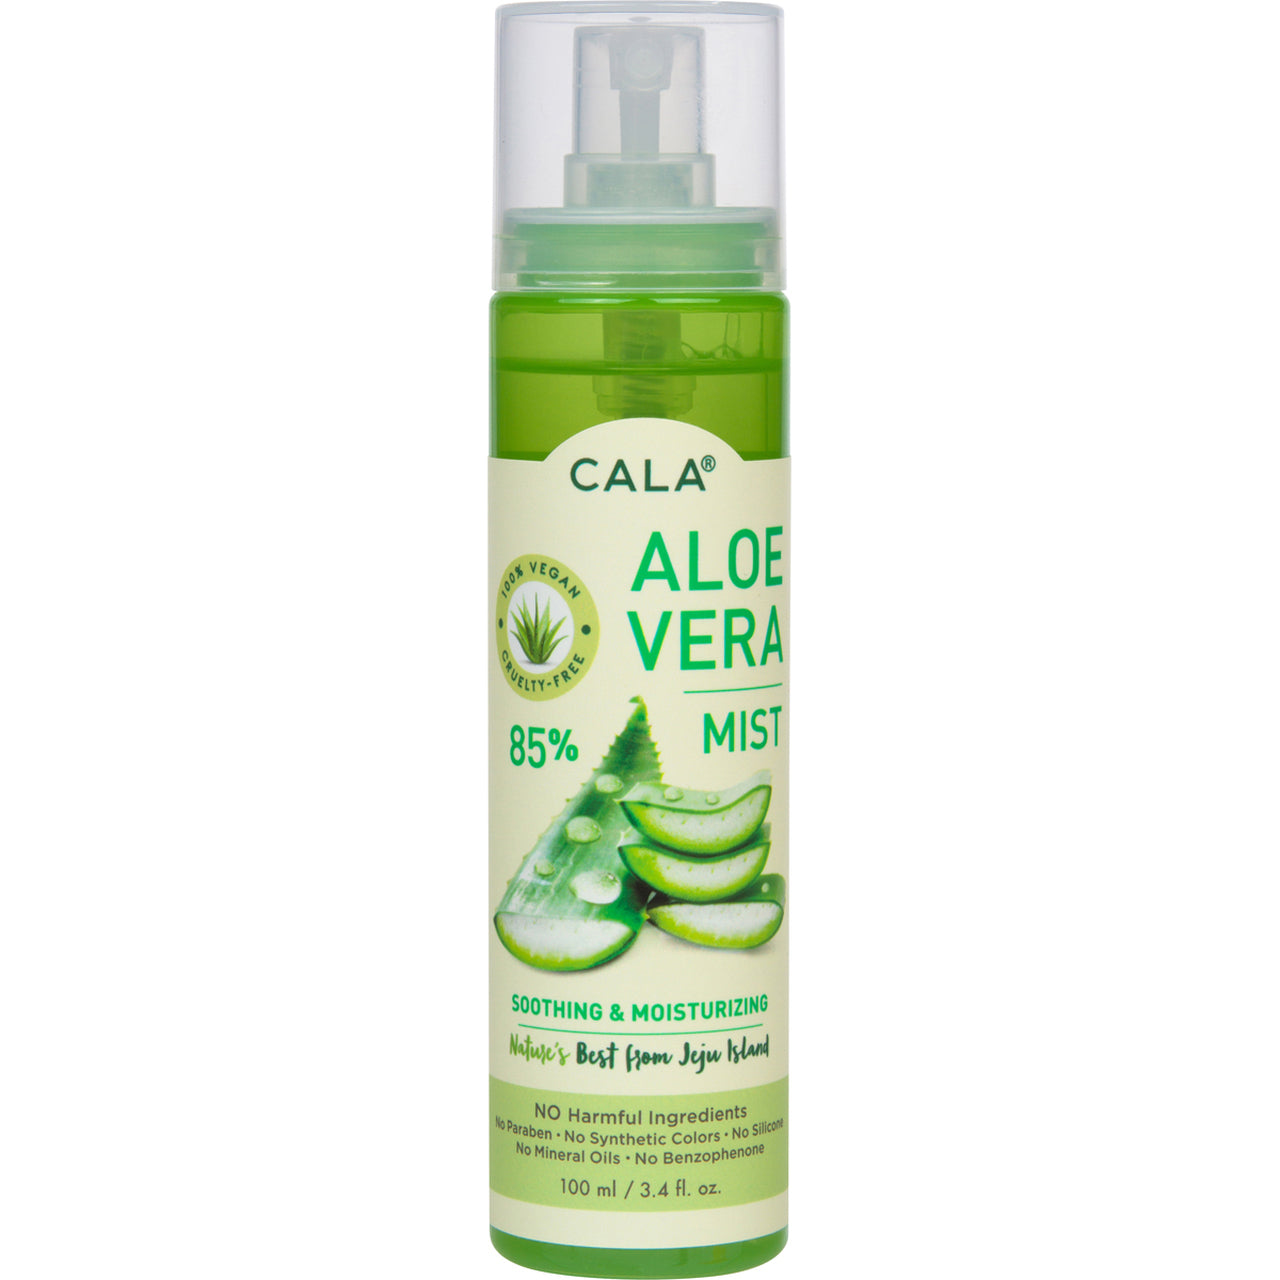 Cala Pro Aloe Vera 85% soothing & Moisturizing Mist